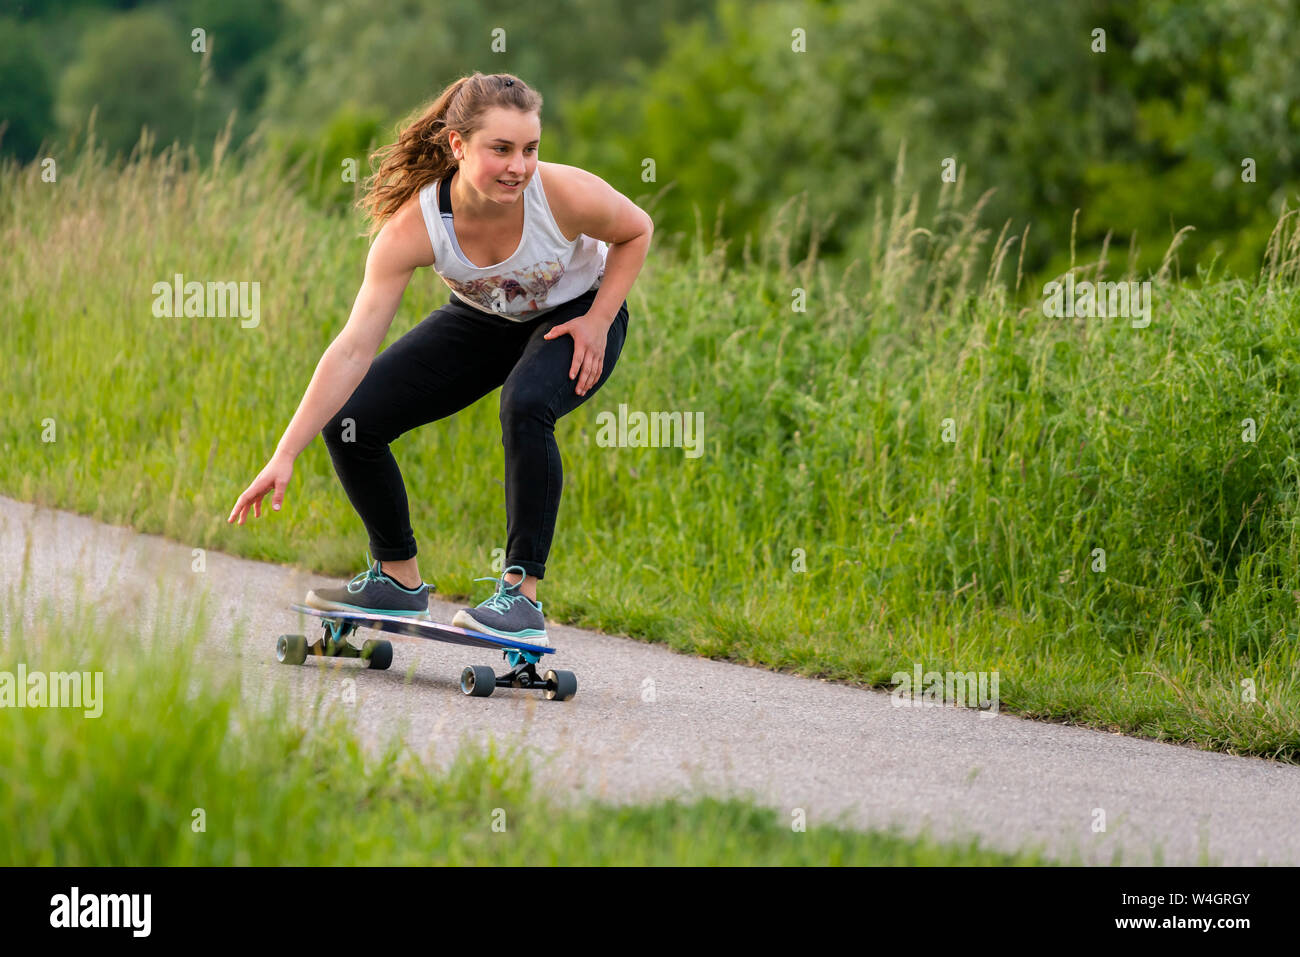 Young woman riding longboard Stock Photo